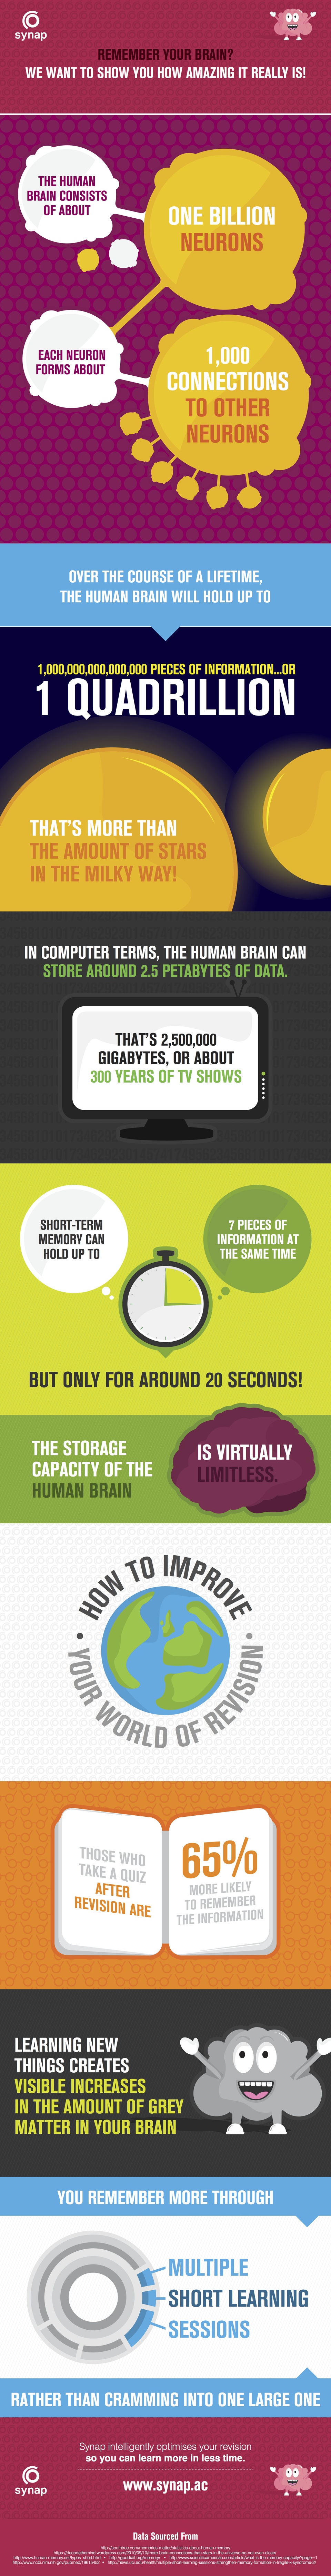 Your Amazing Memory Infographic